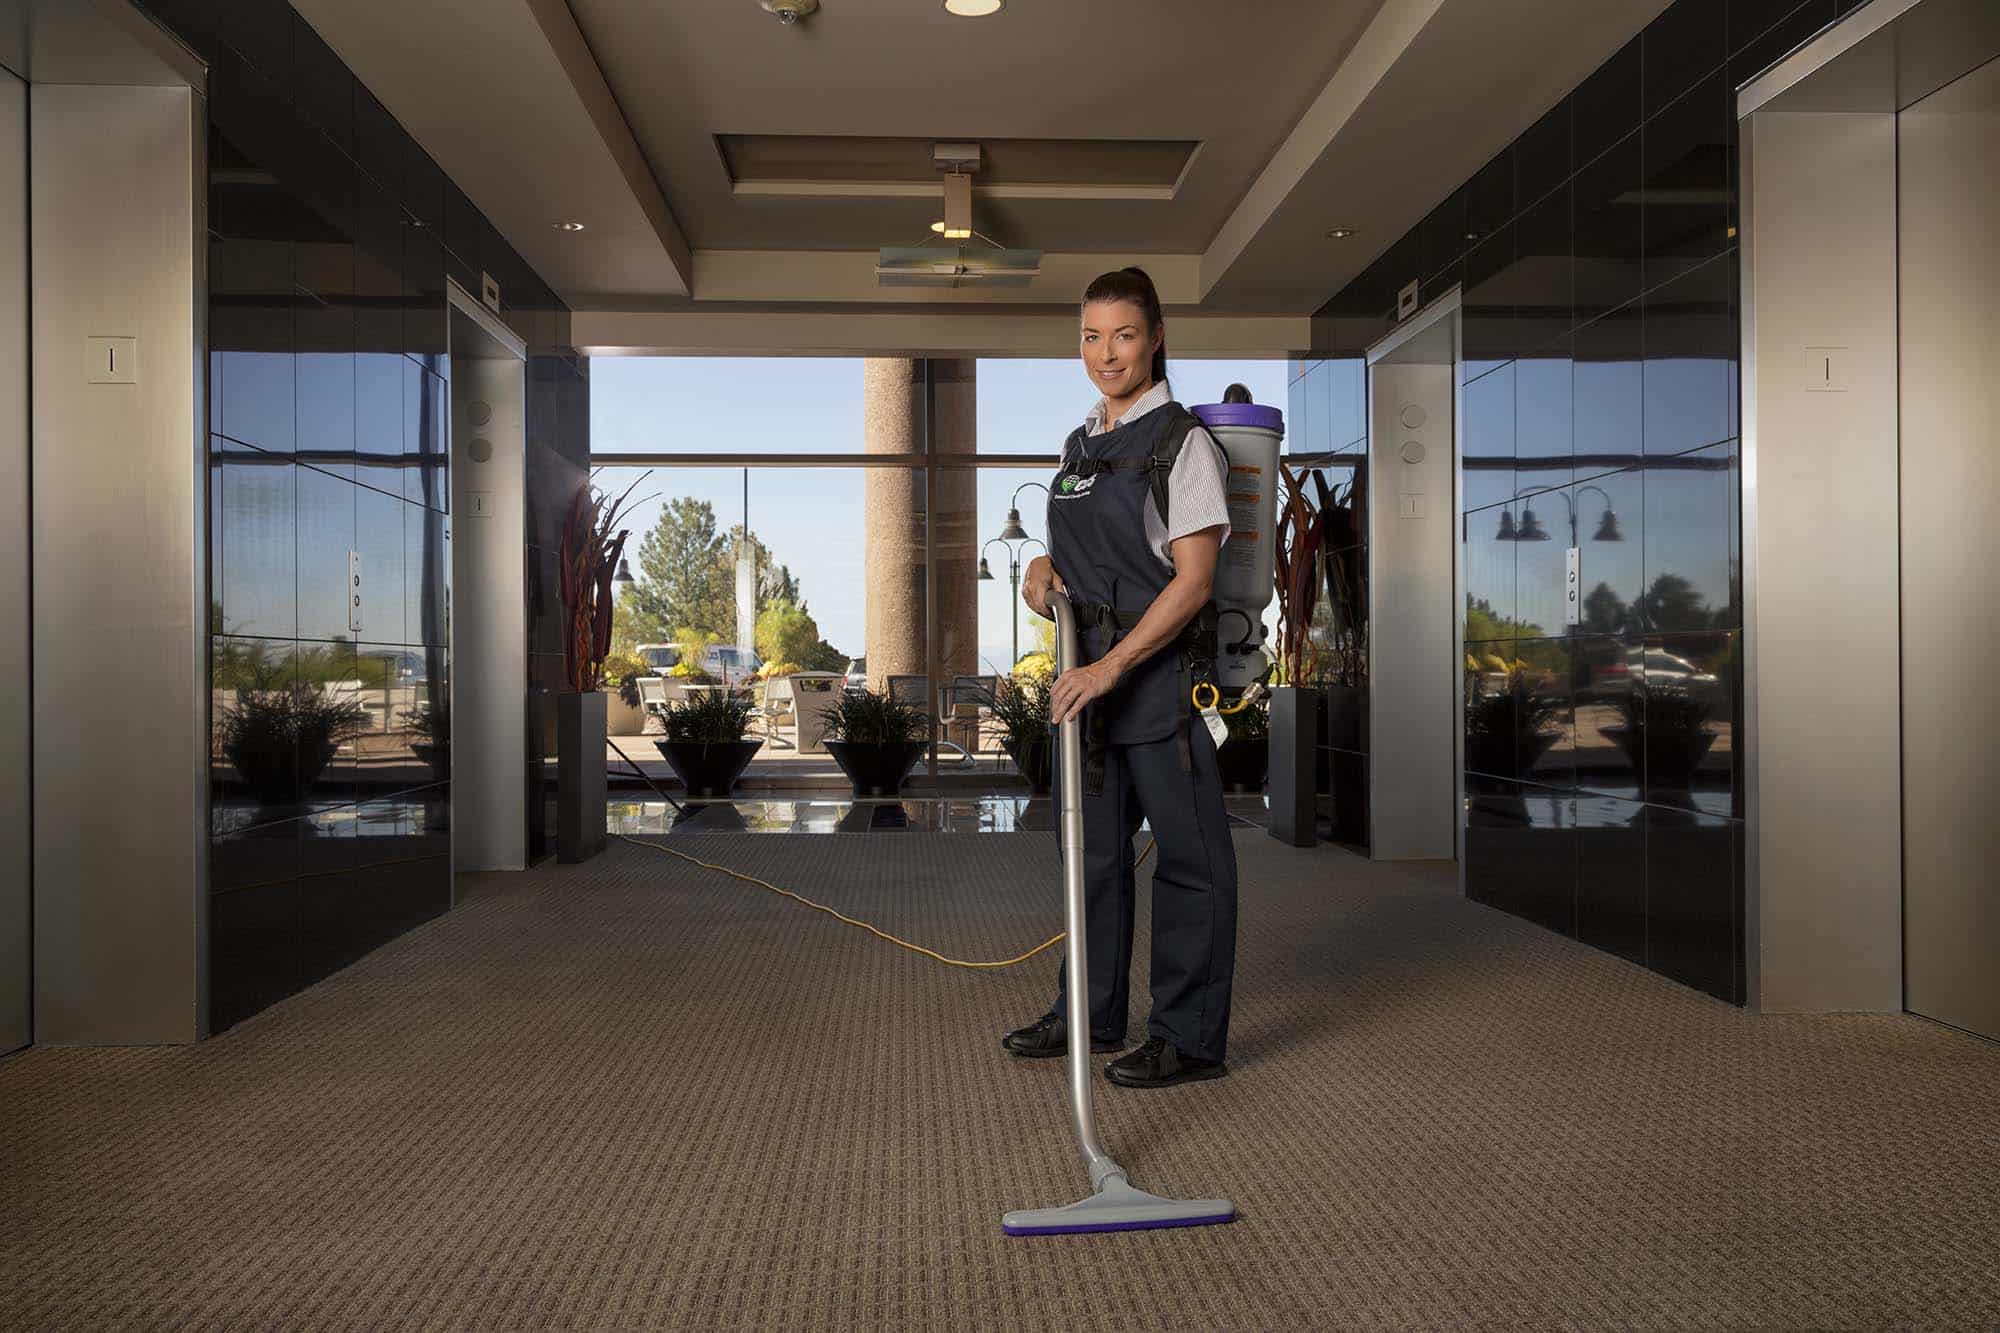 CCS Lady vacuuming an office hallway